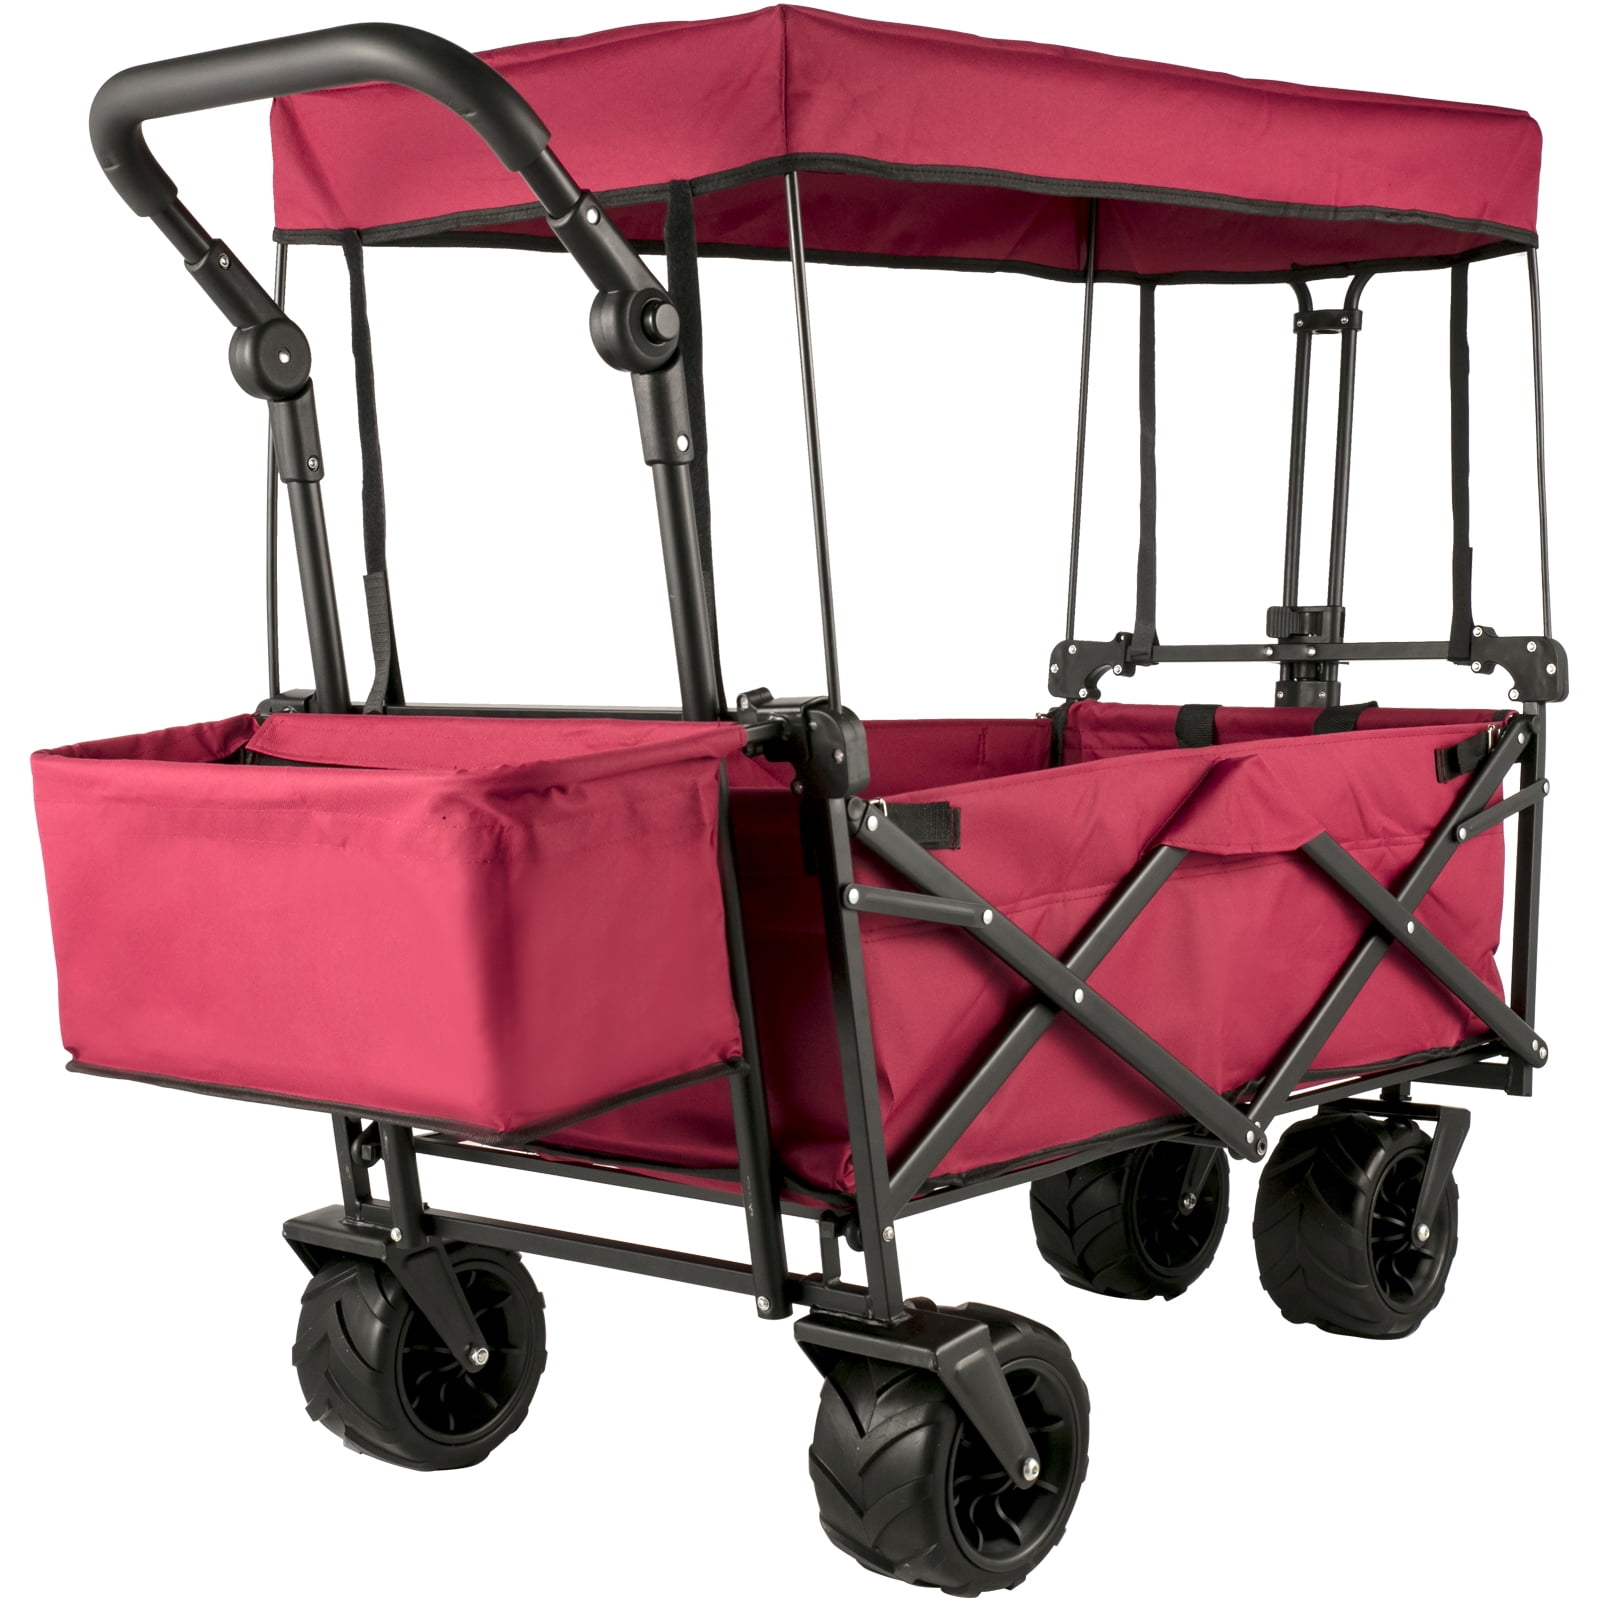 Introducing Collapsible X-Cart 